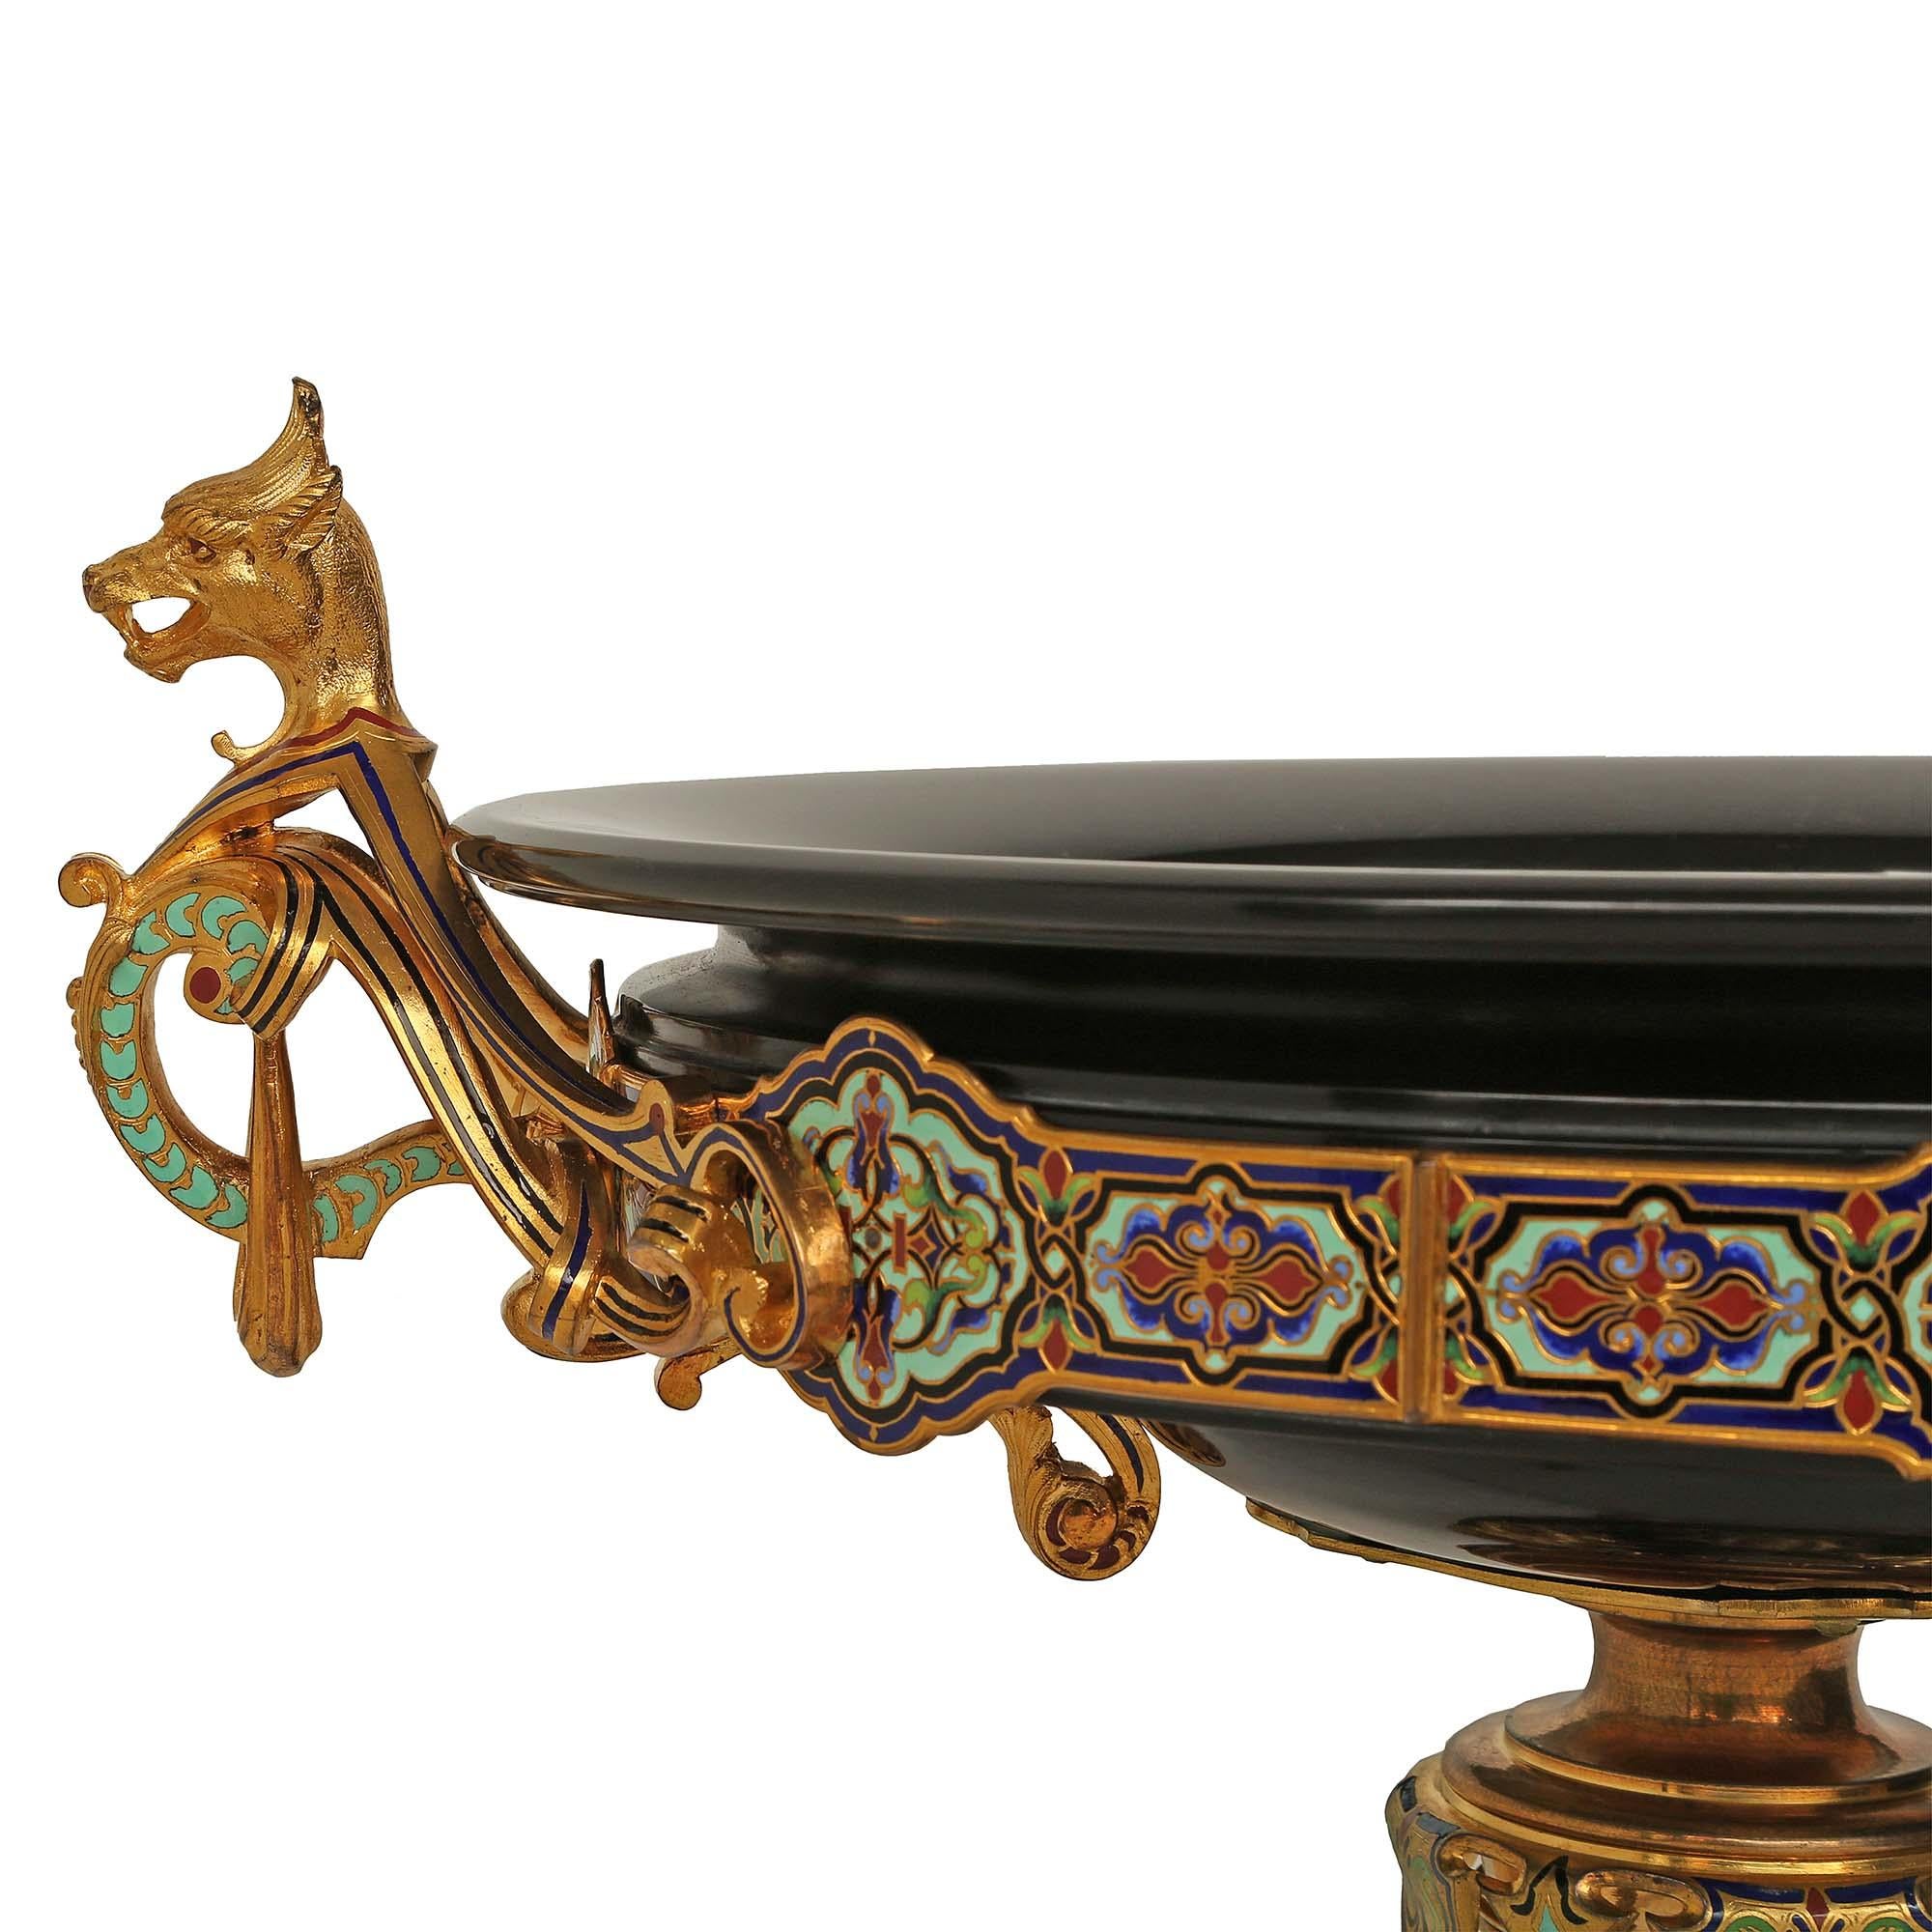 French 19th Century Belle Époque Period Marble, Ormolu and Cloisonné Centerpiece For Sale 2